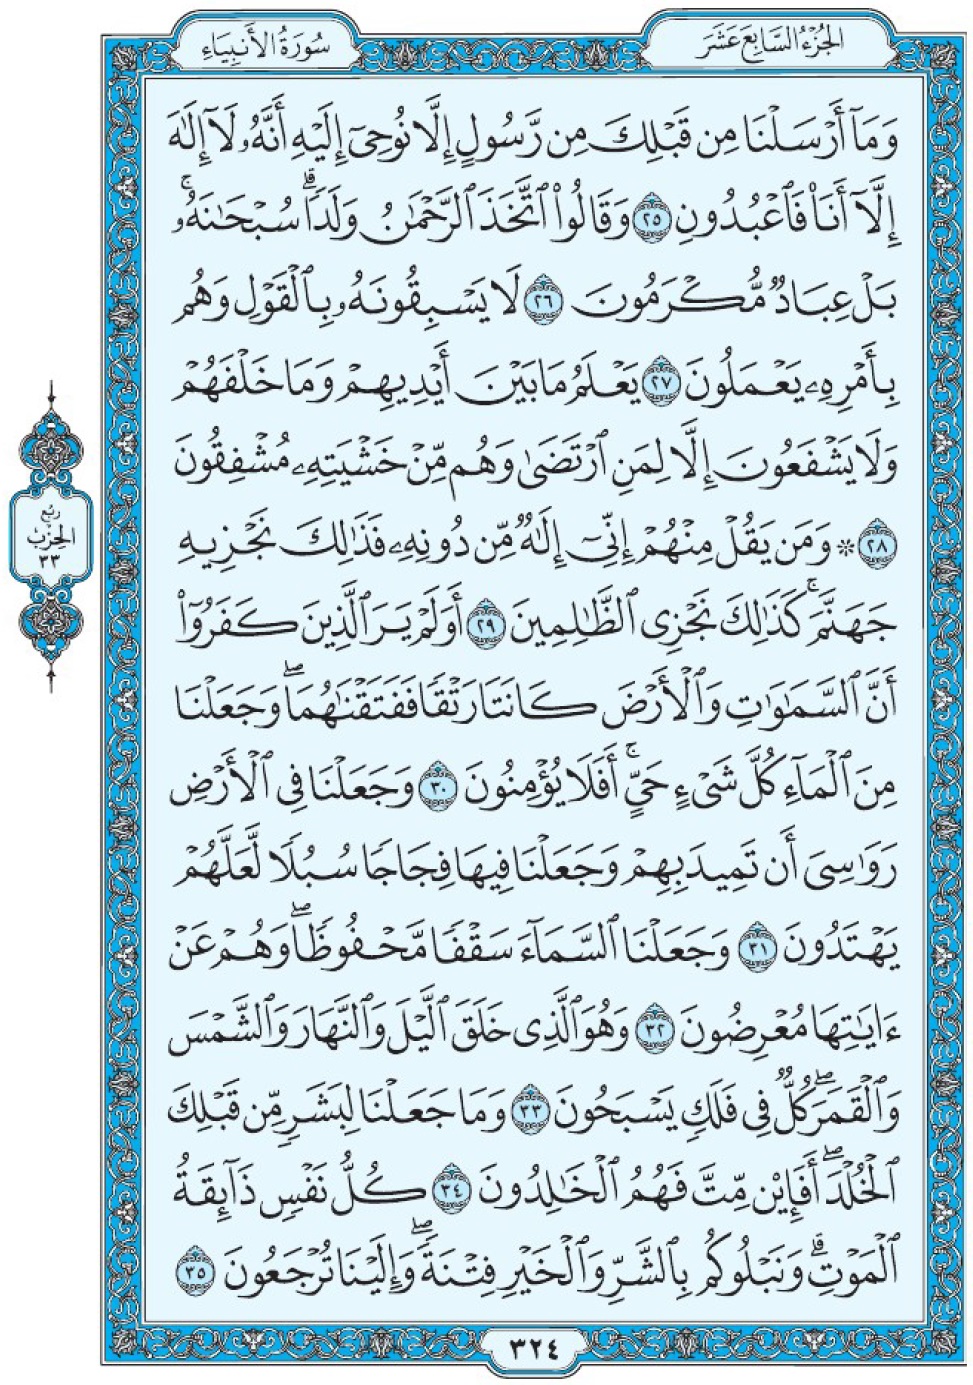 Коран Мединский мусхаф страница 324, Аль-Анбия, аят 25-35